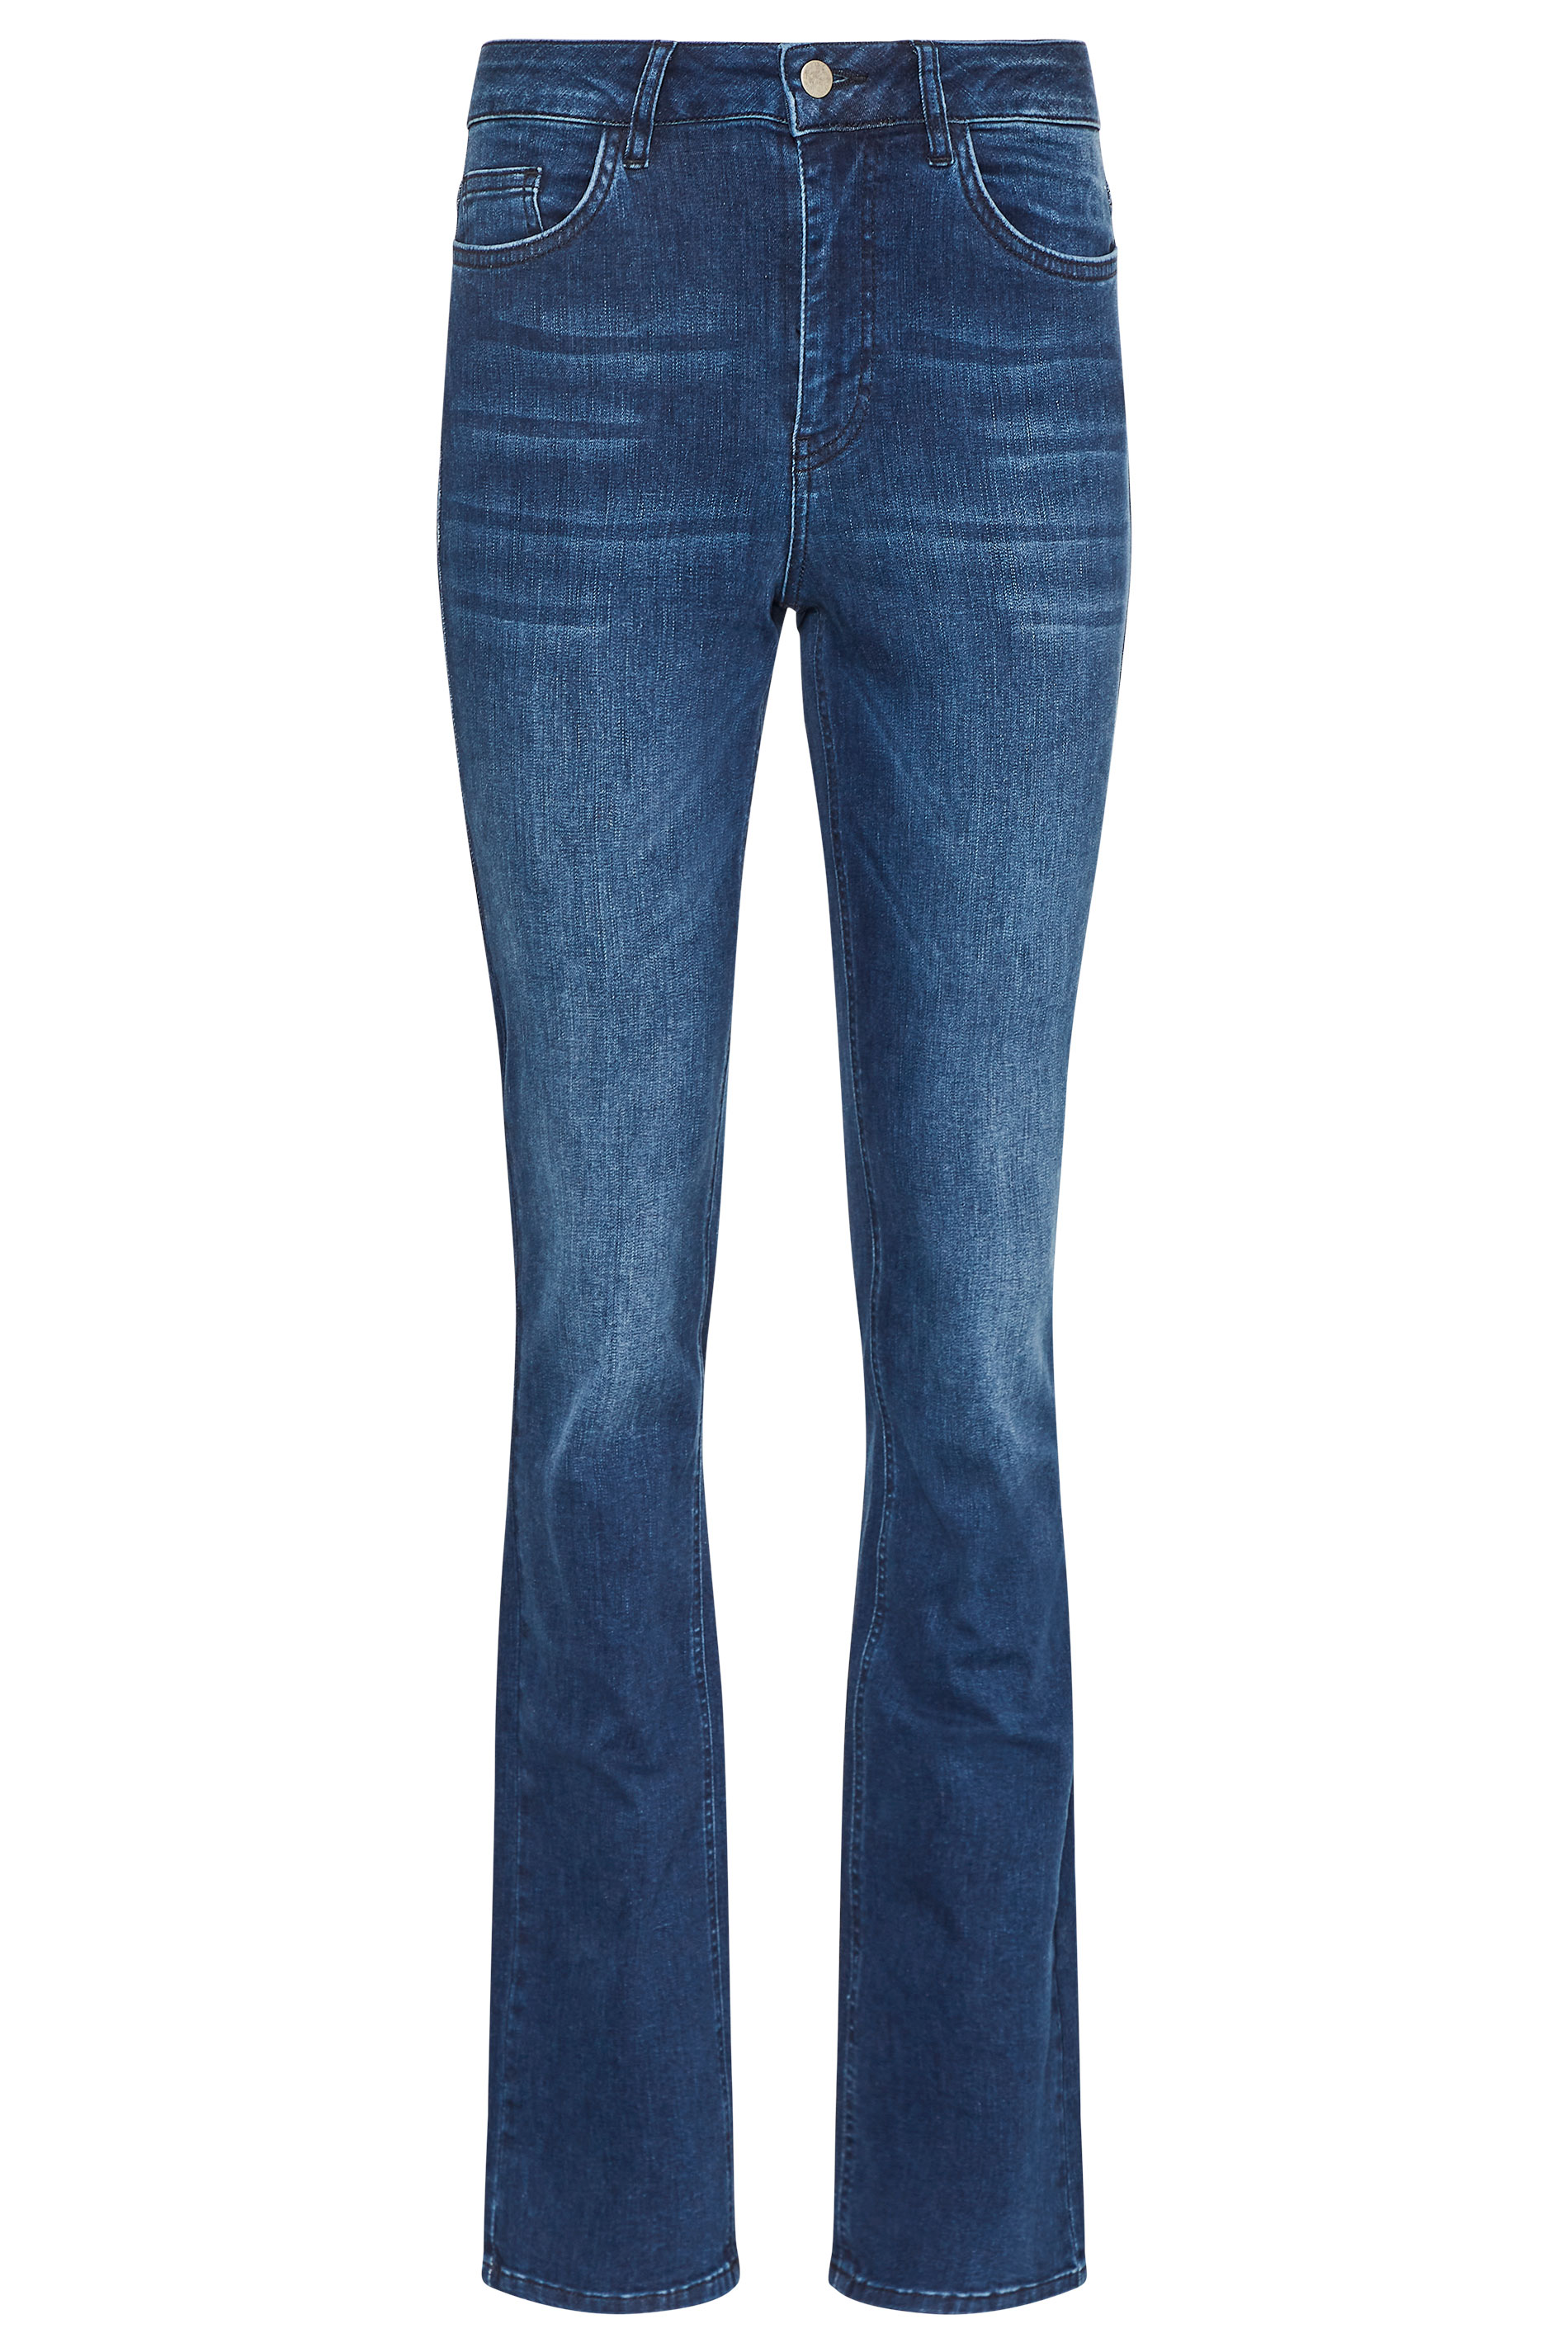 Indigo Blue Ultra Stretch Bootcut Jeans | Long Tall Sally